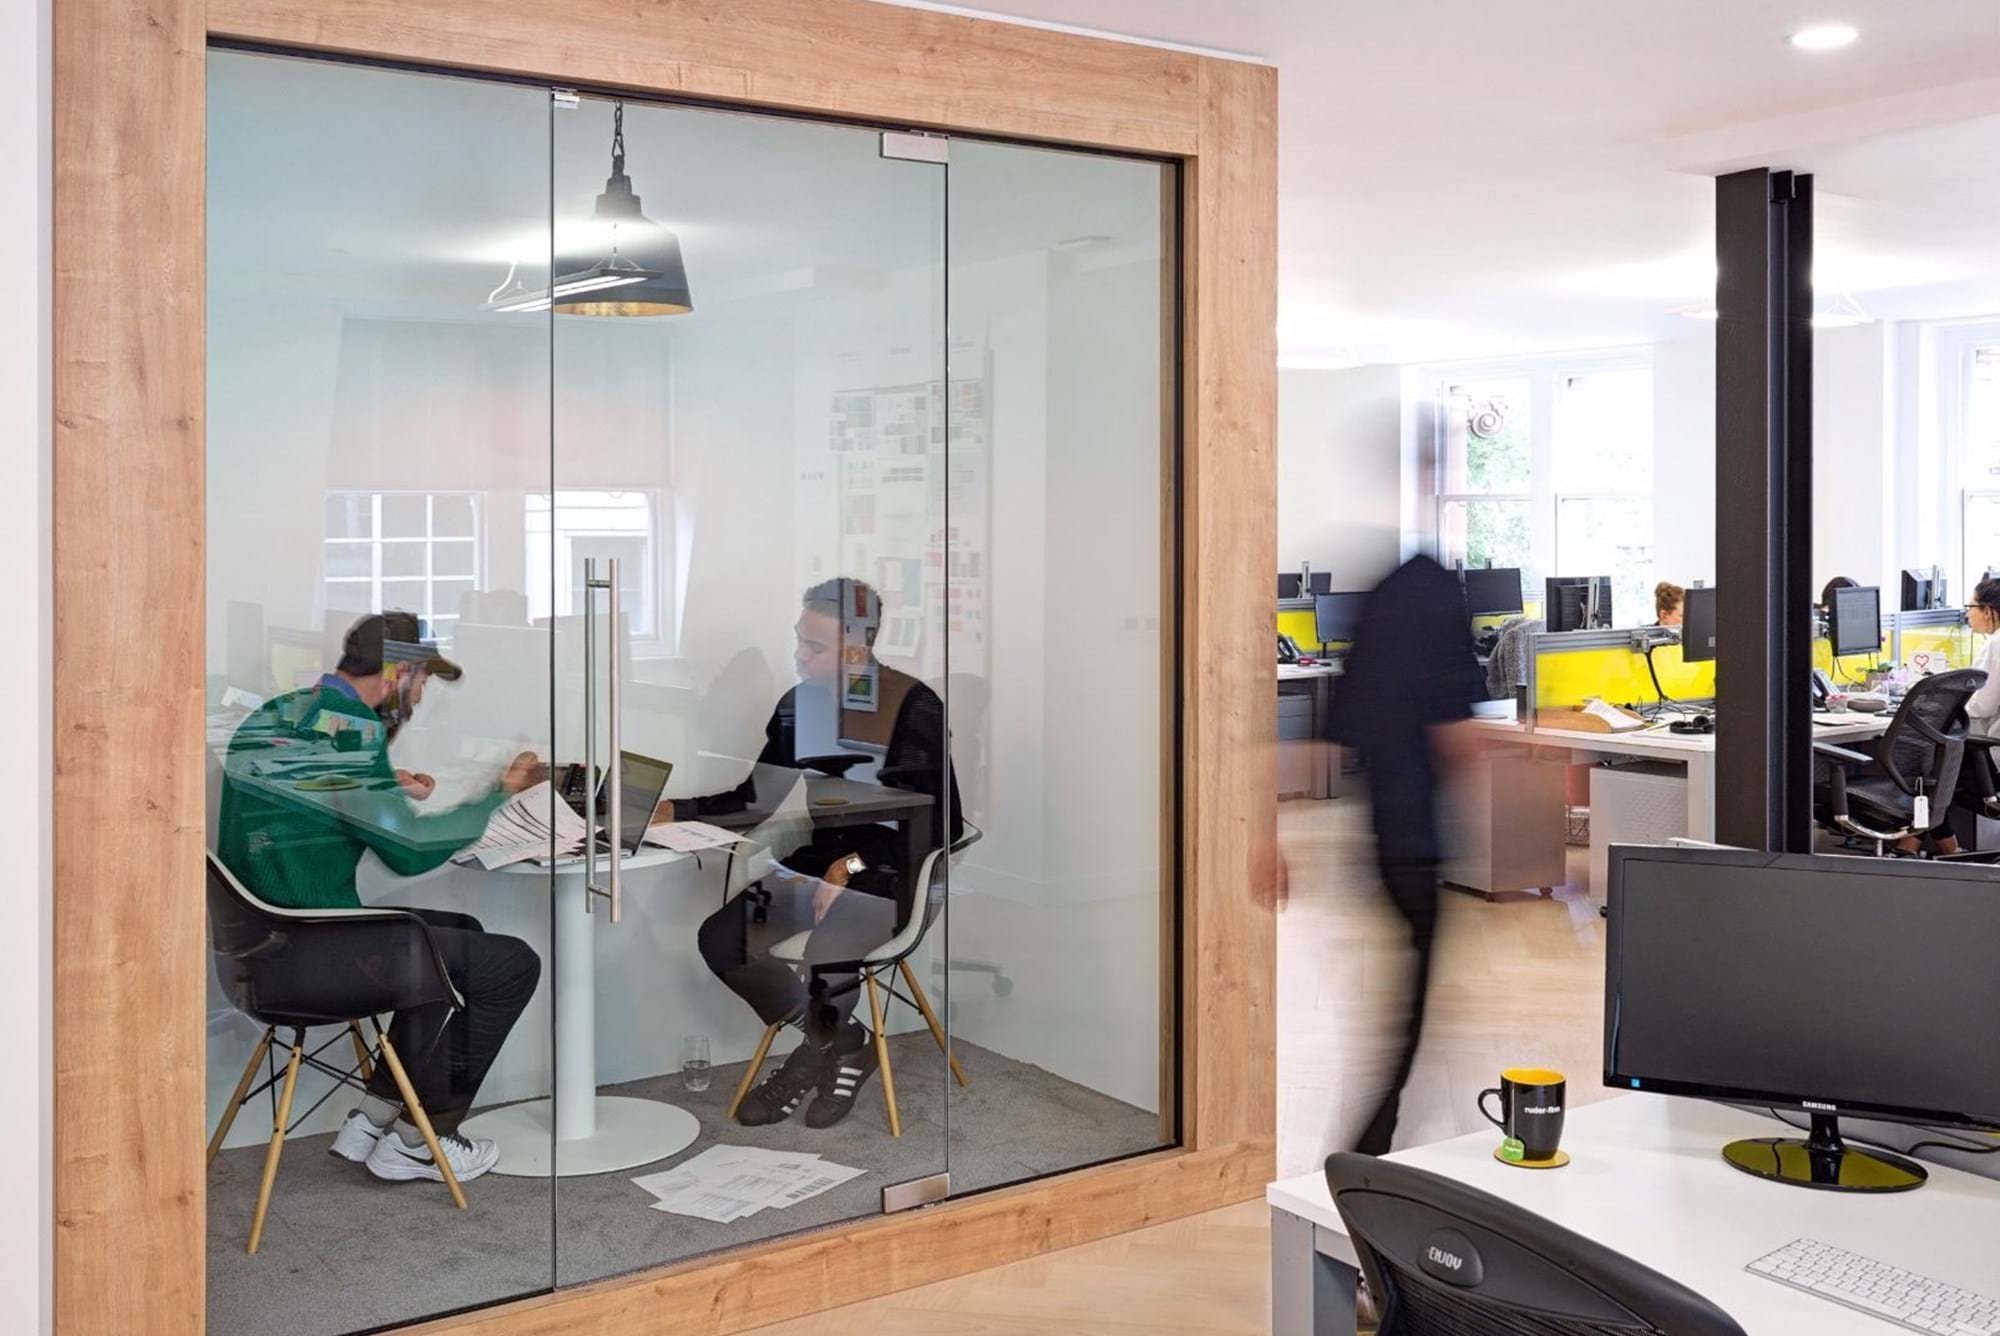 Modus Workspace office design, fit out and refurbishment - Ruderfinn - Ruder Finn 12 highres sRGB.jpg